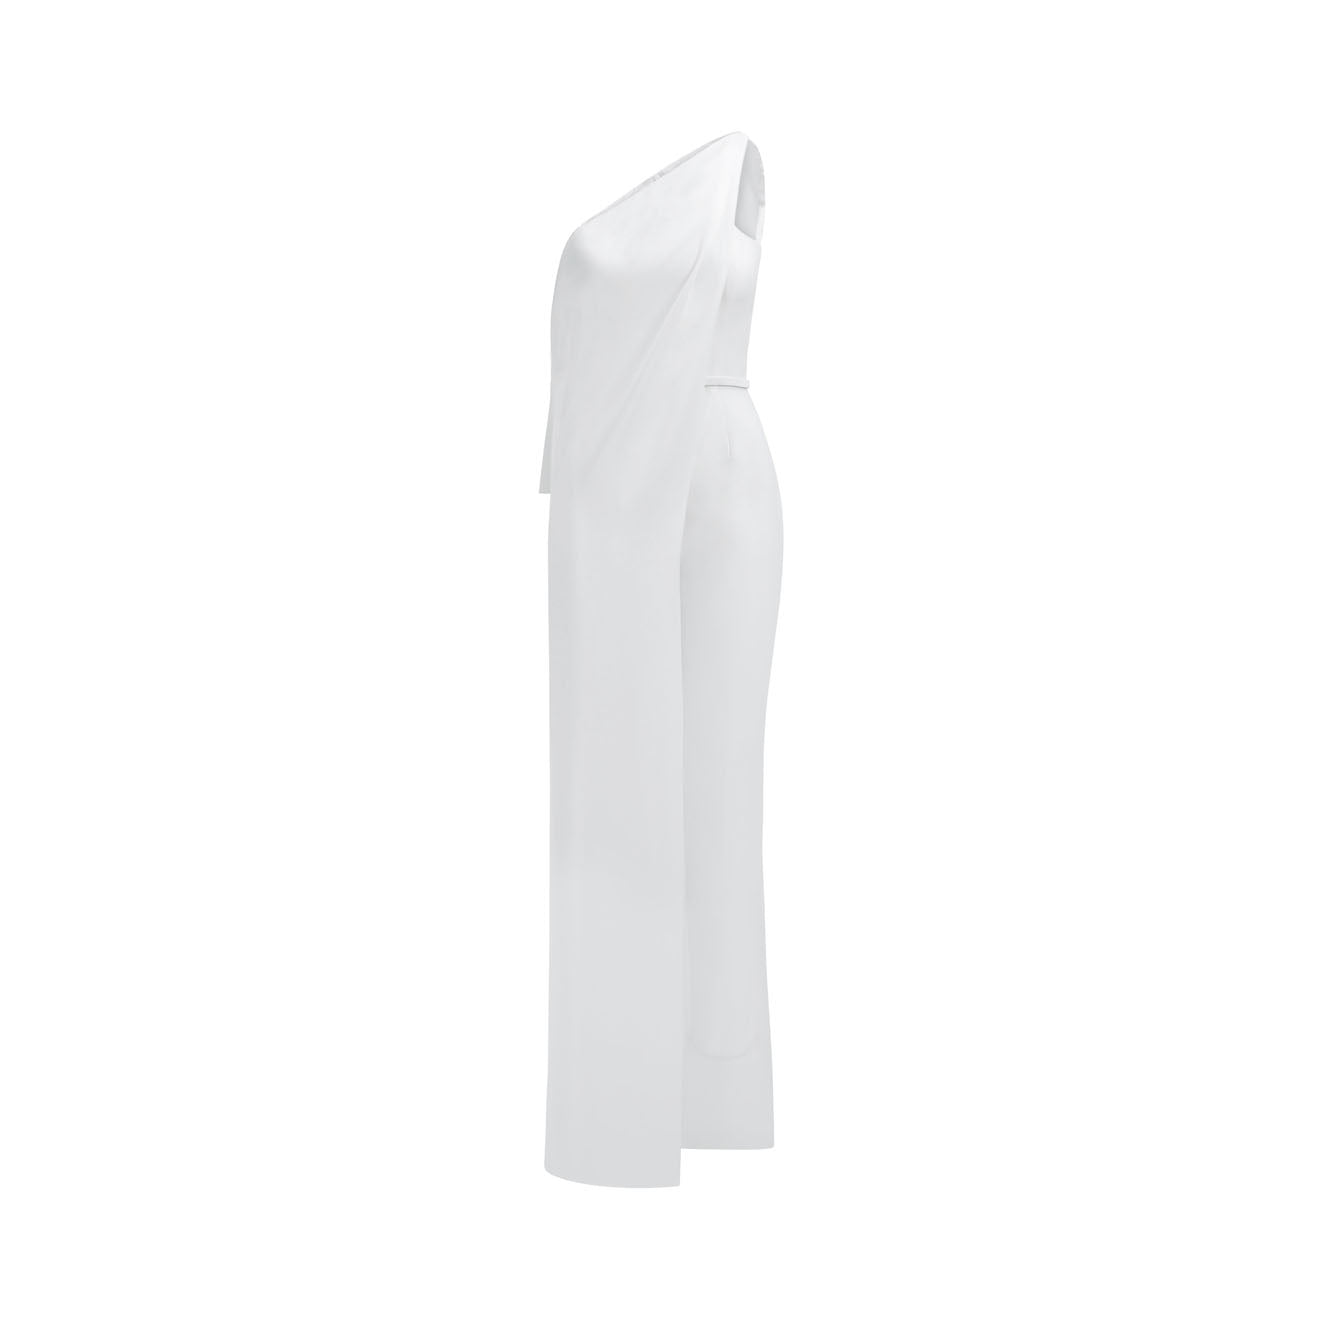 Asymmetrical single shoulder jumpsuit with white cape